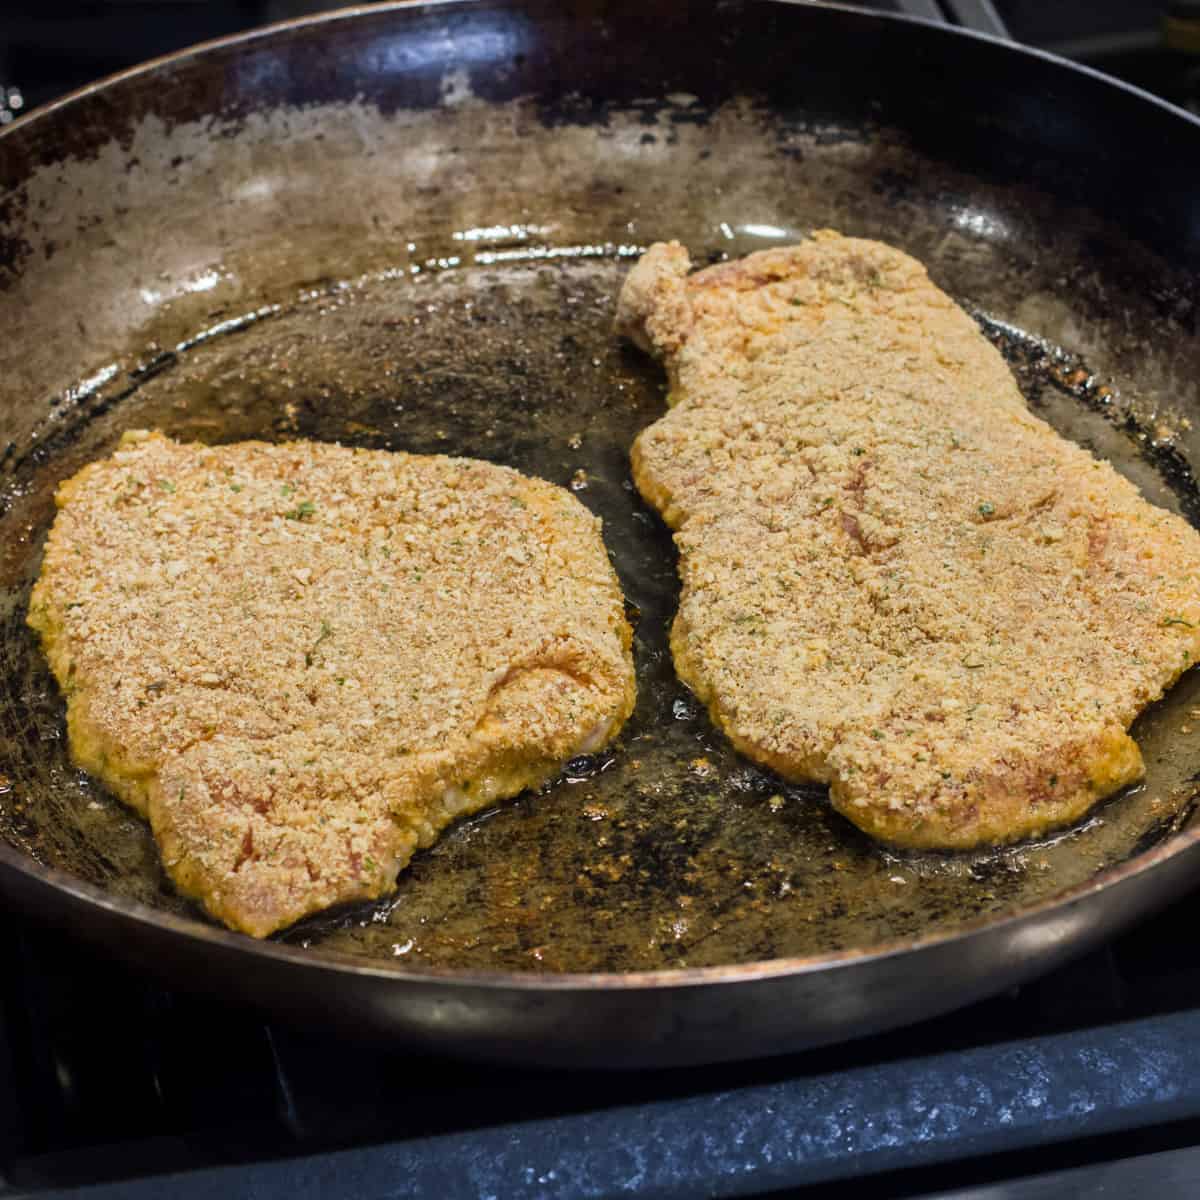 Breaded pork chops in a skillet.